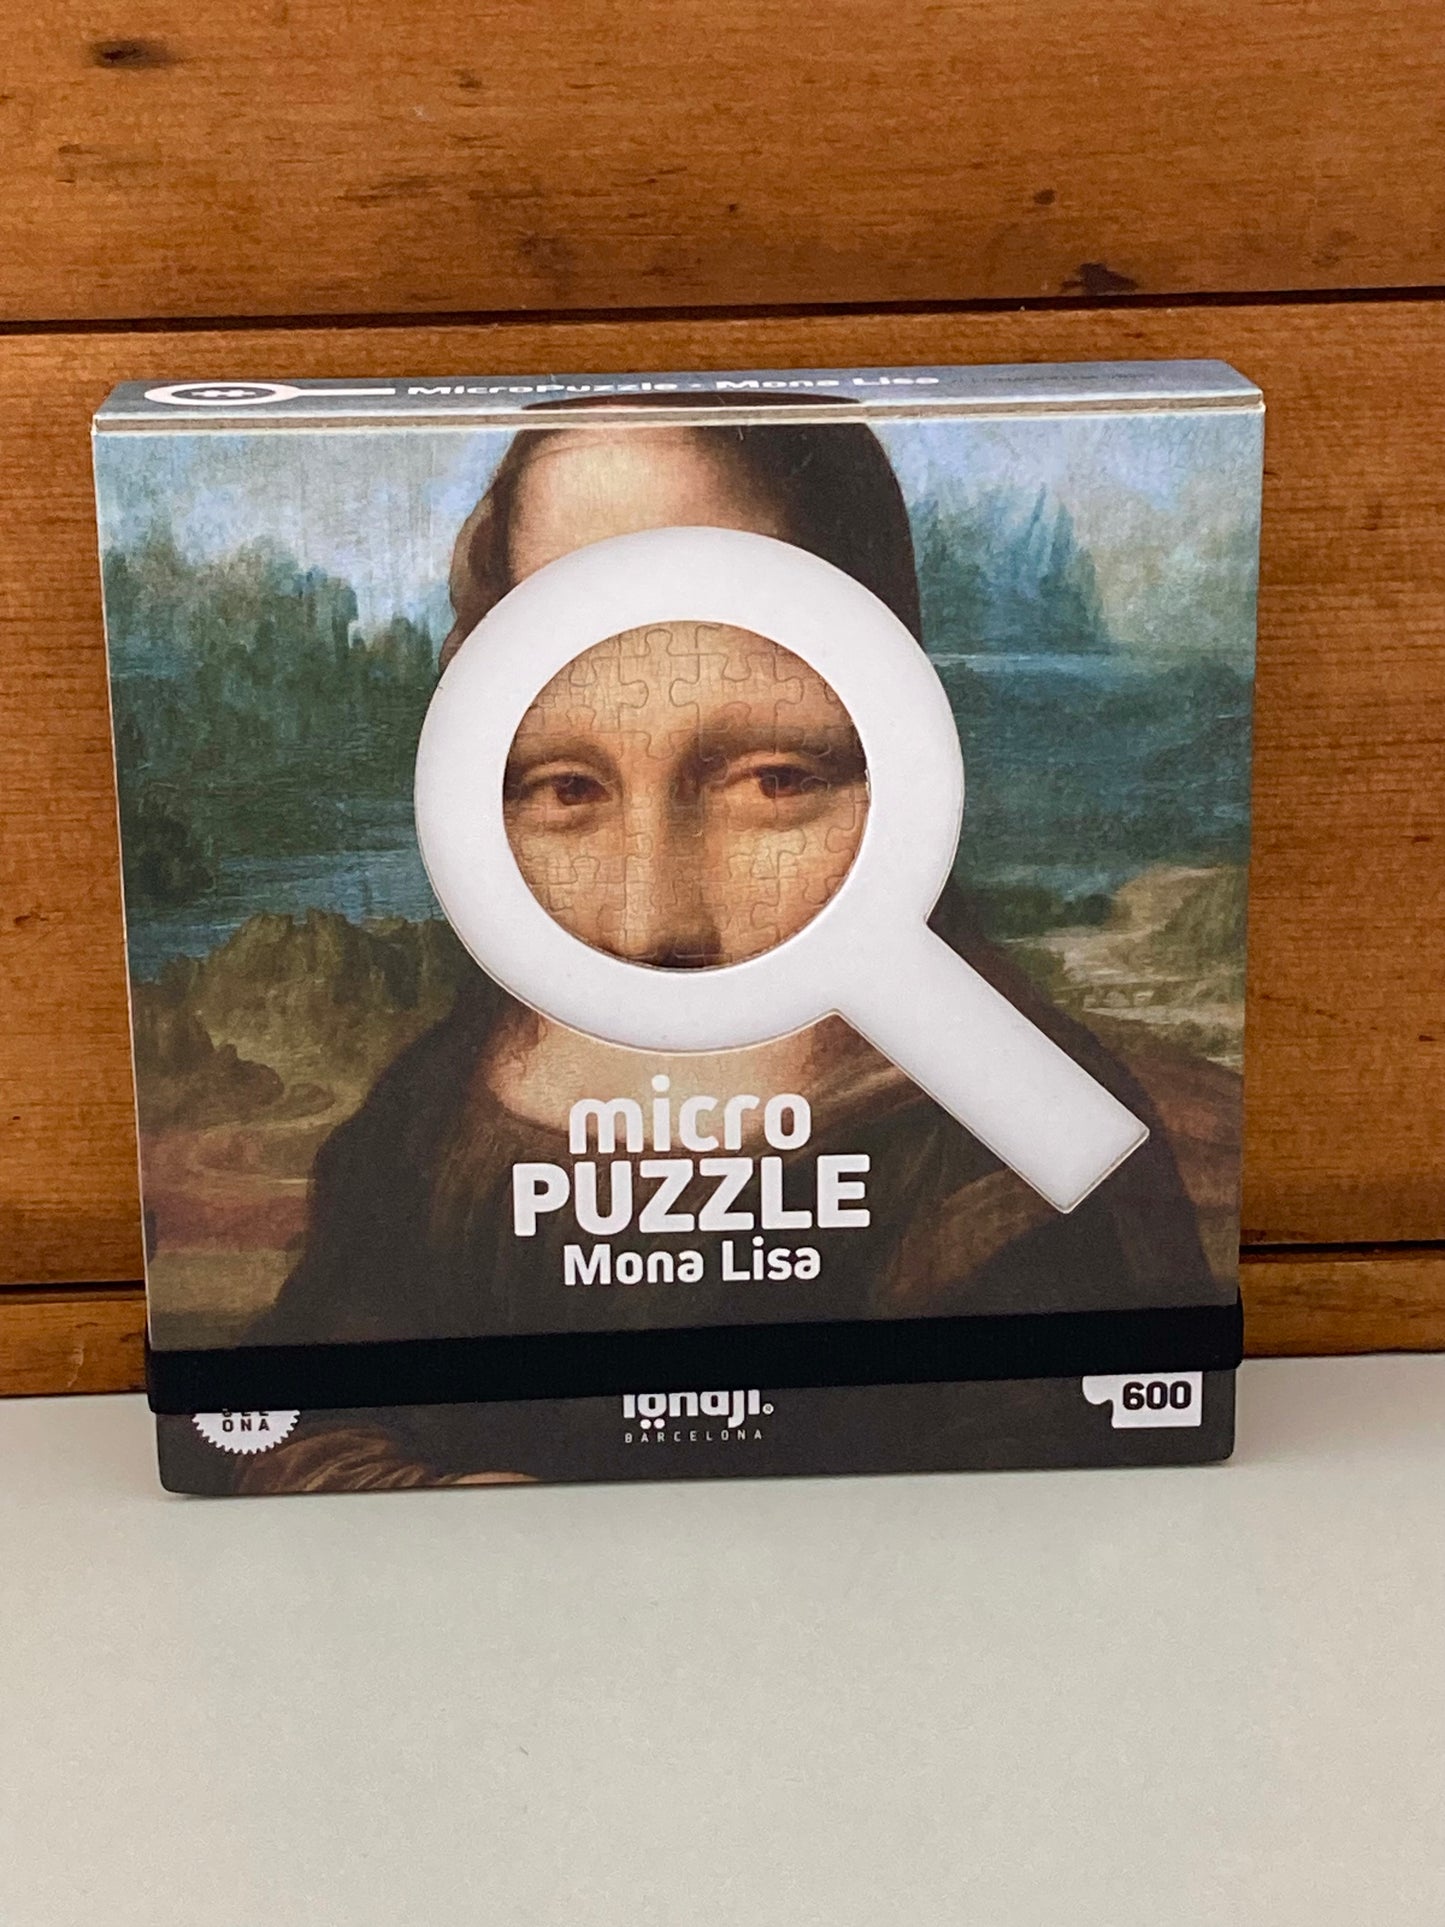 Puzzle - Da Vinci's MONA LISA (Micro puzzle) 600 pieces!